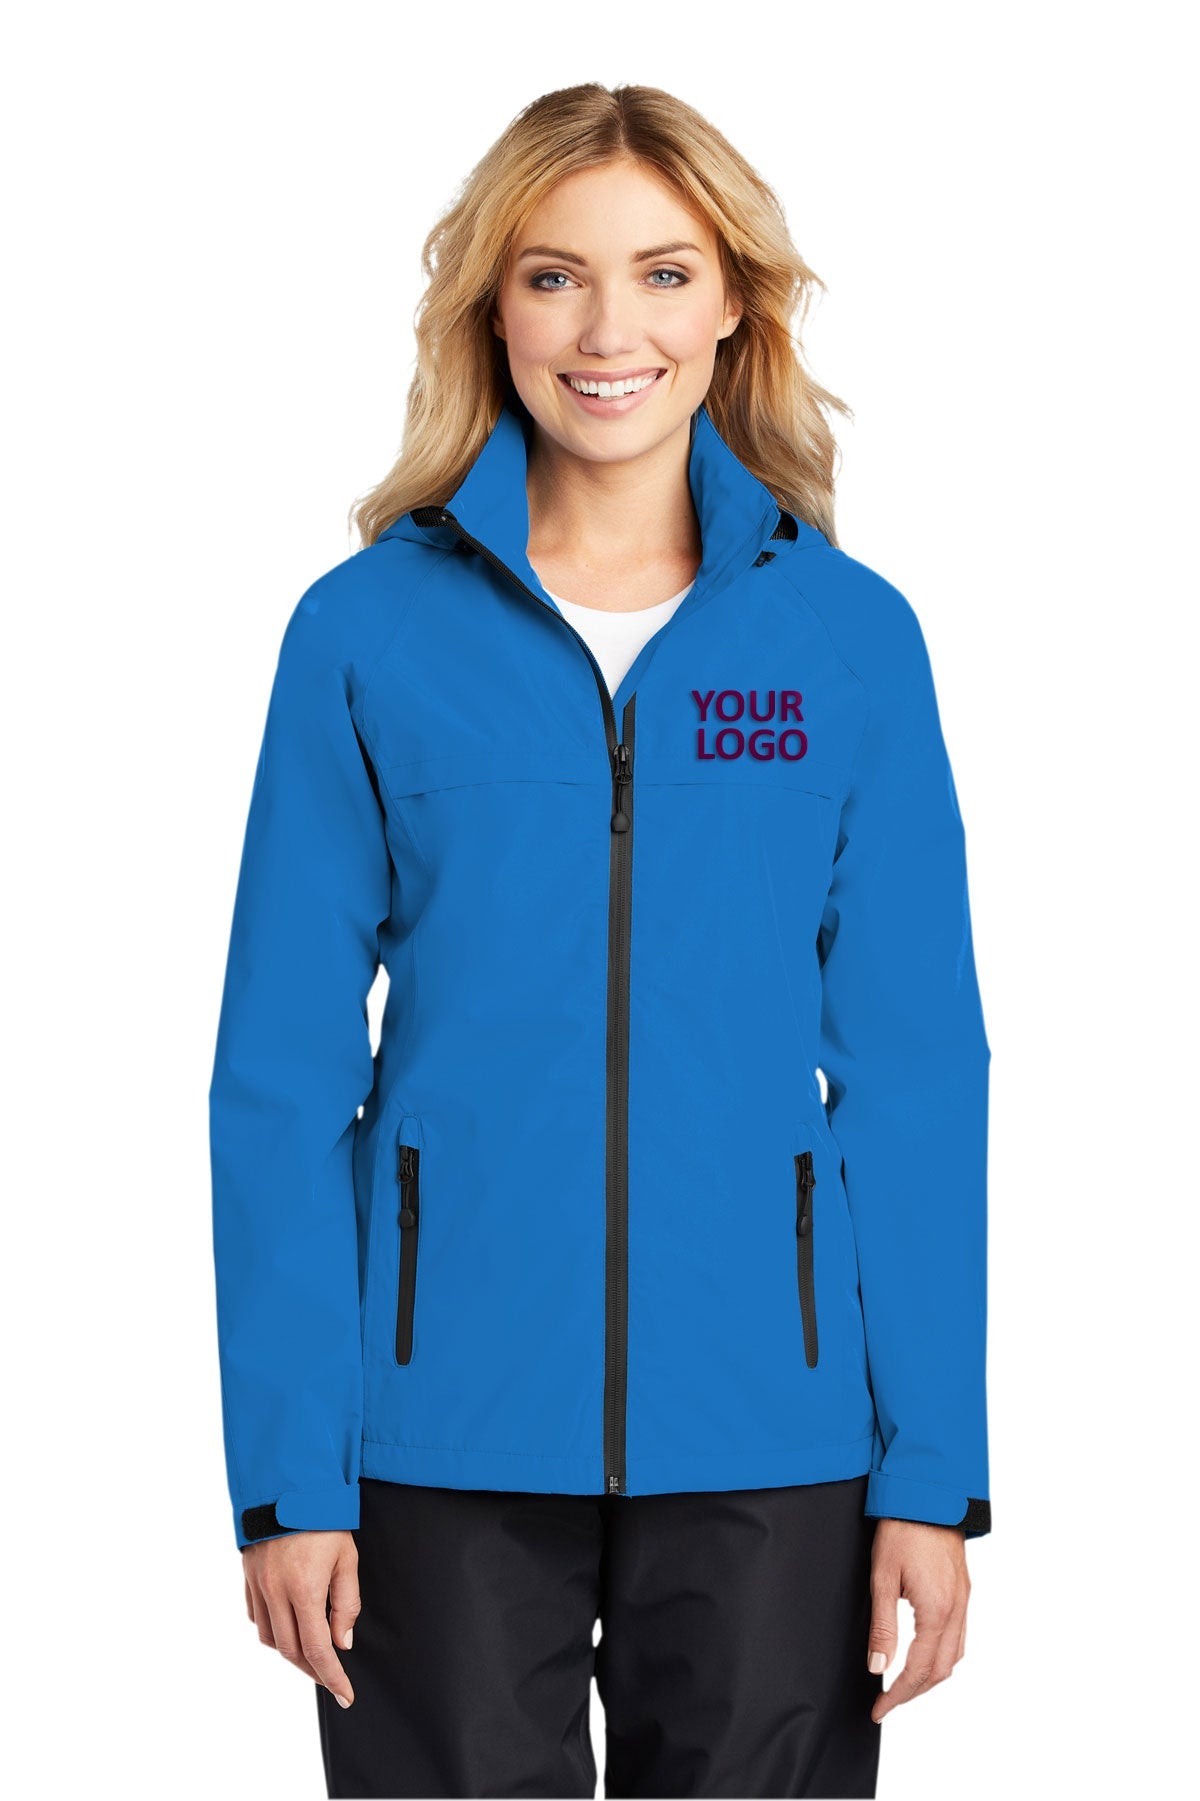 Port Authority Direct Blue L333 custom logo jackets